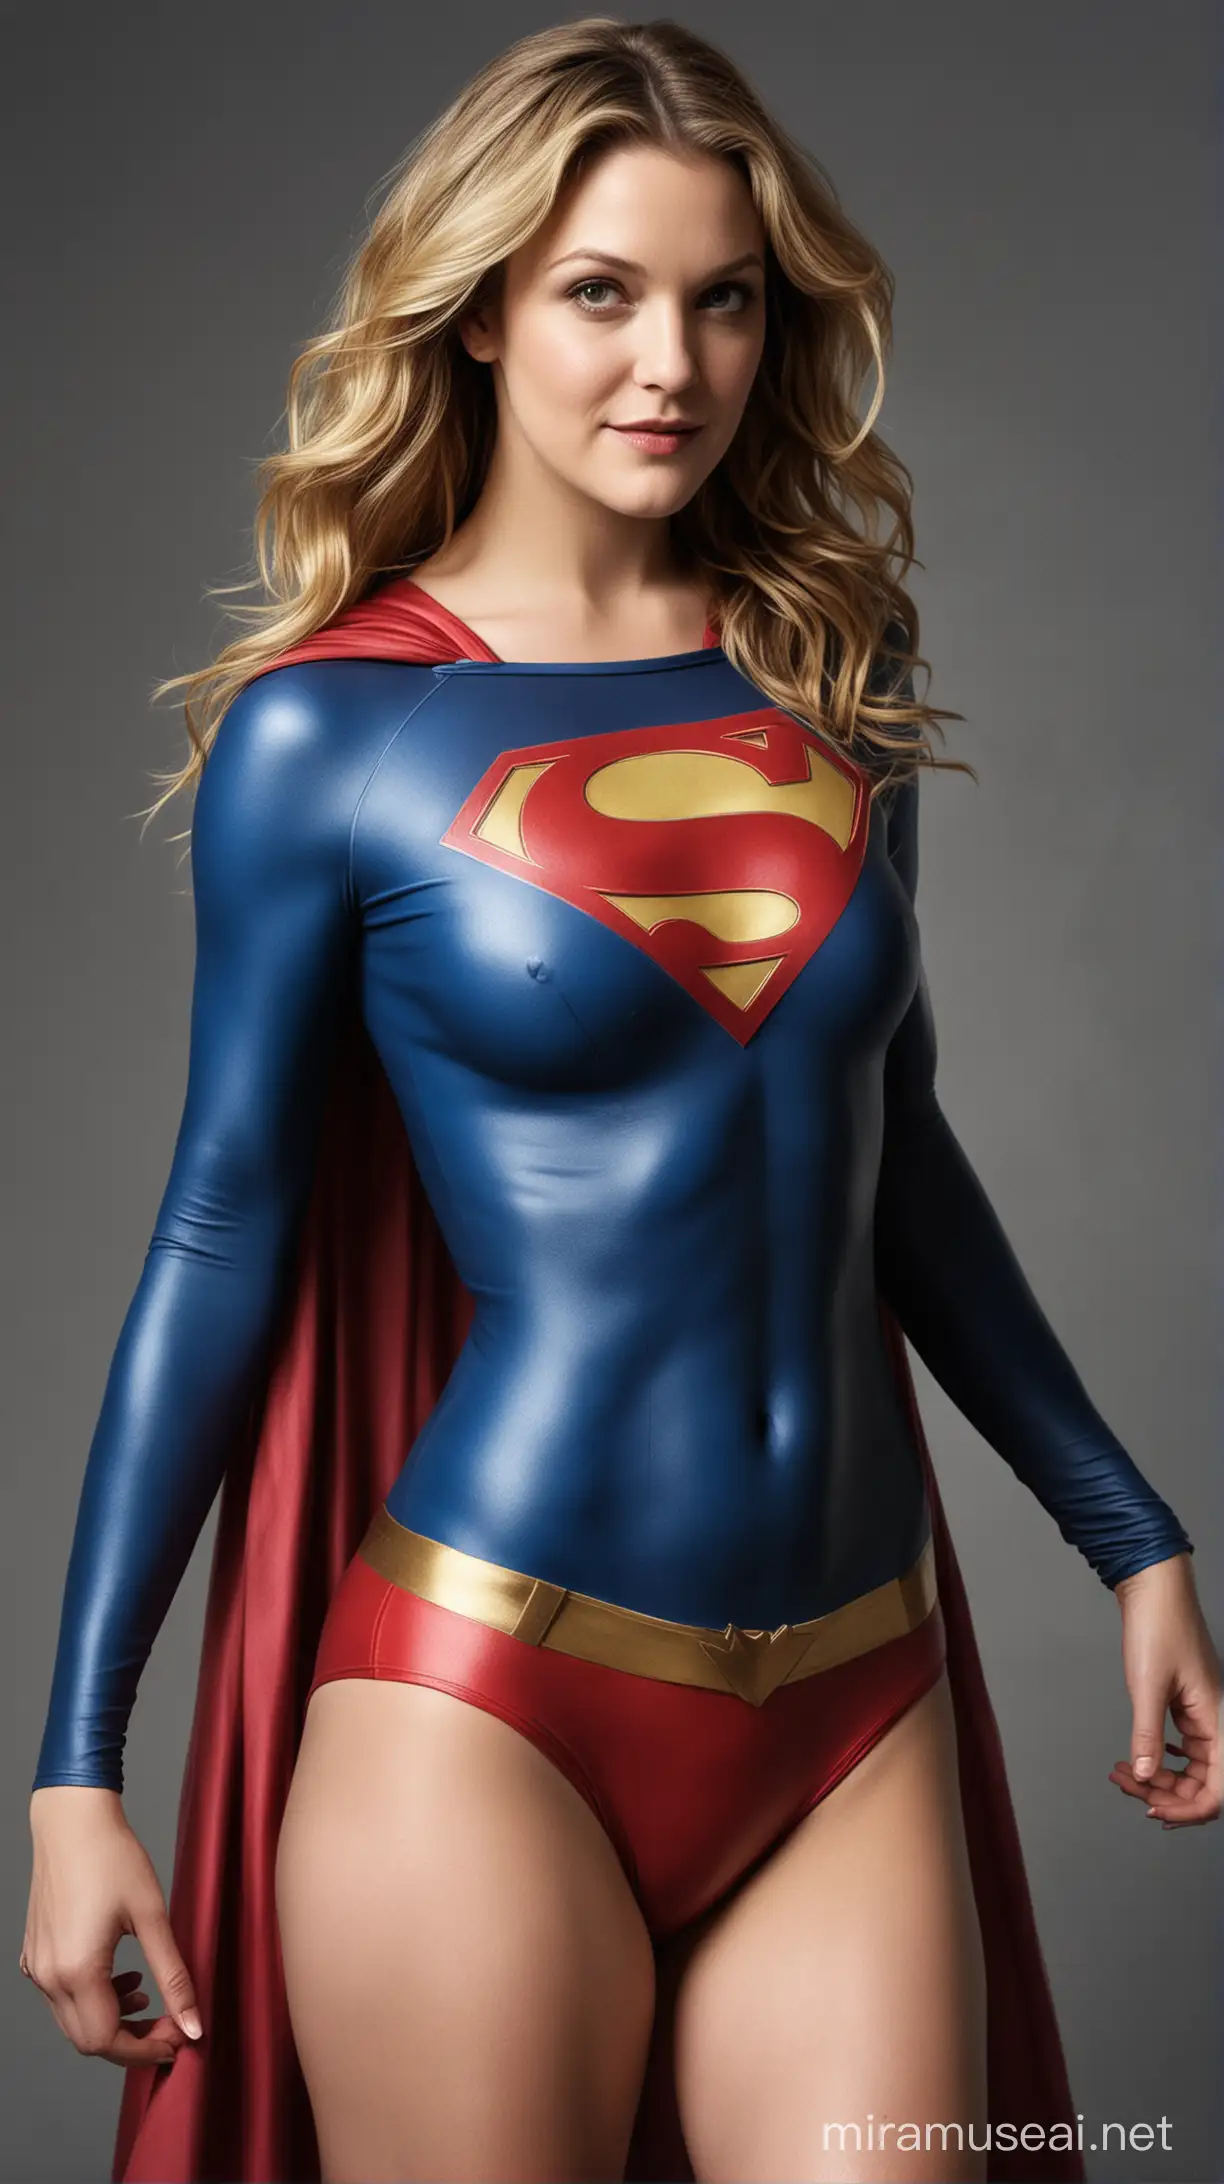 Seductive Drew Barrymore in Supergirl Body Paint Vulnerable to Kryptonite